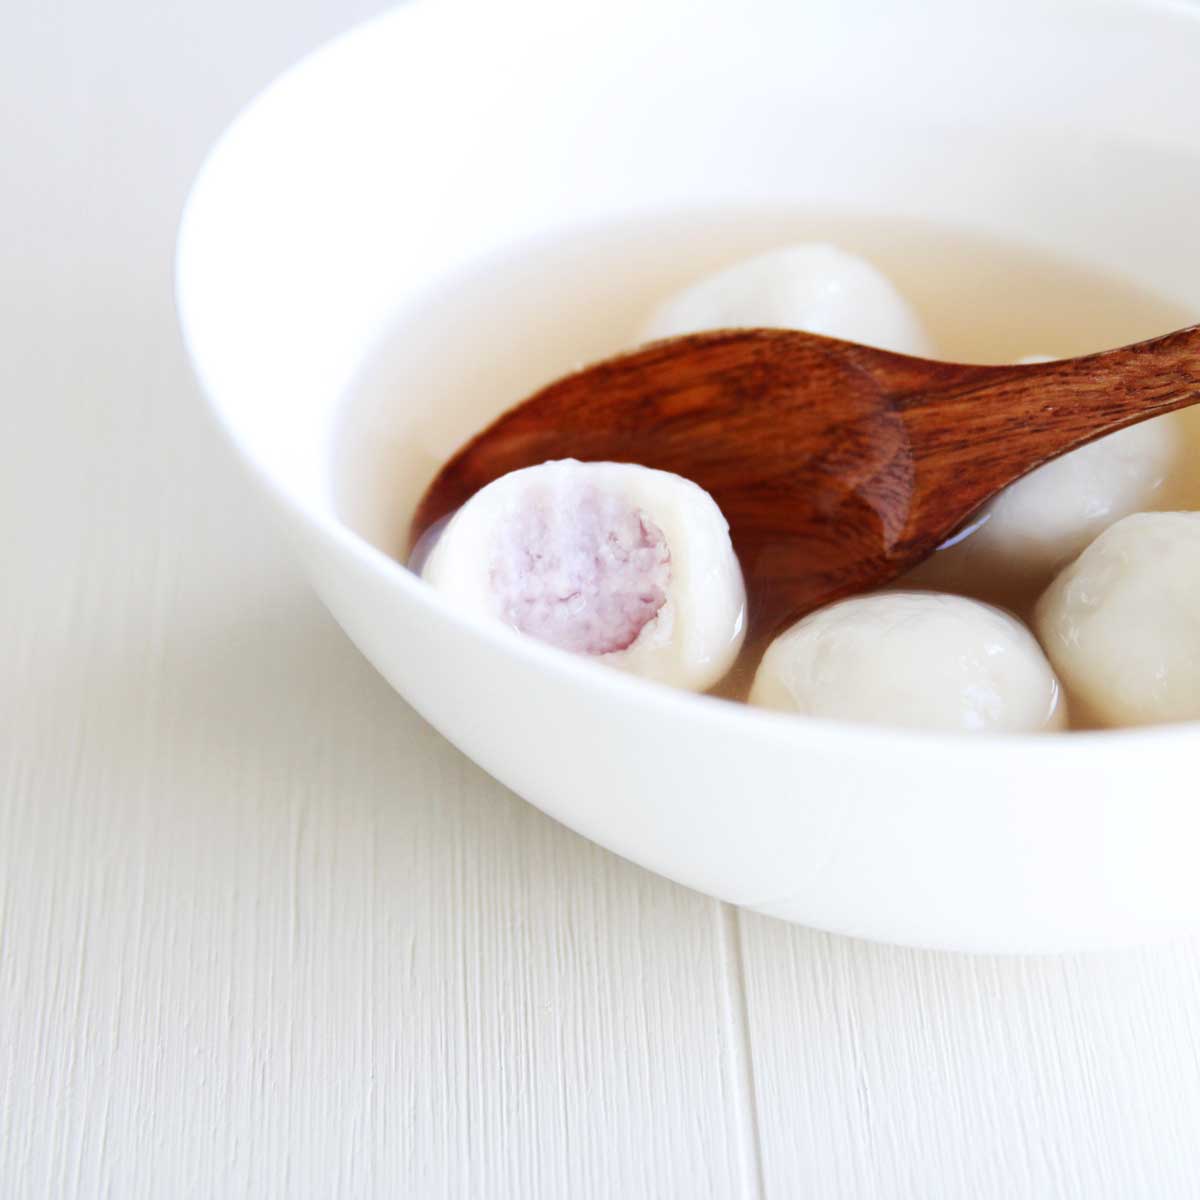 Taro Tang Yuan - Chinese Glutinous Rice Balls Recipe (Gluten Free, Vegan) - Any Flavored Glaze